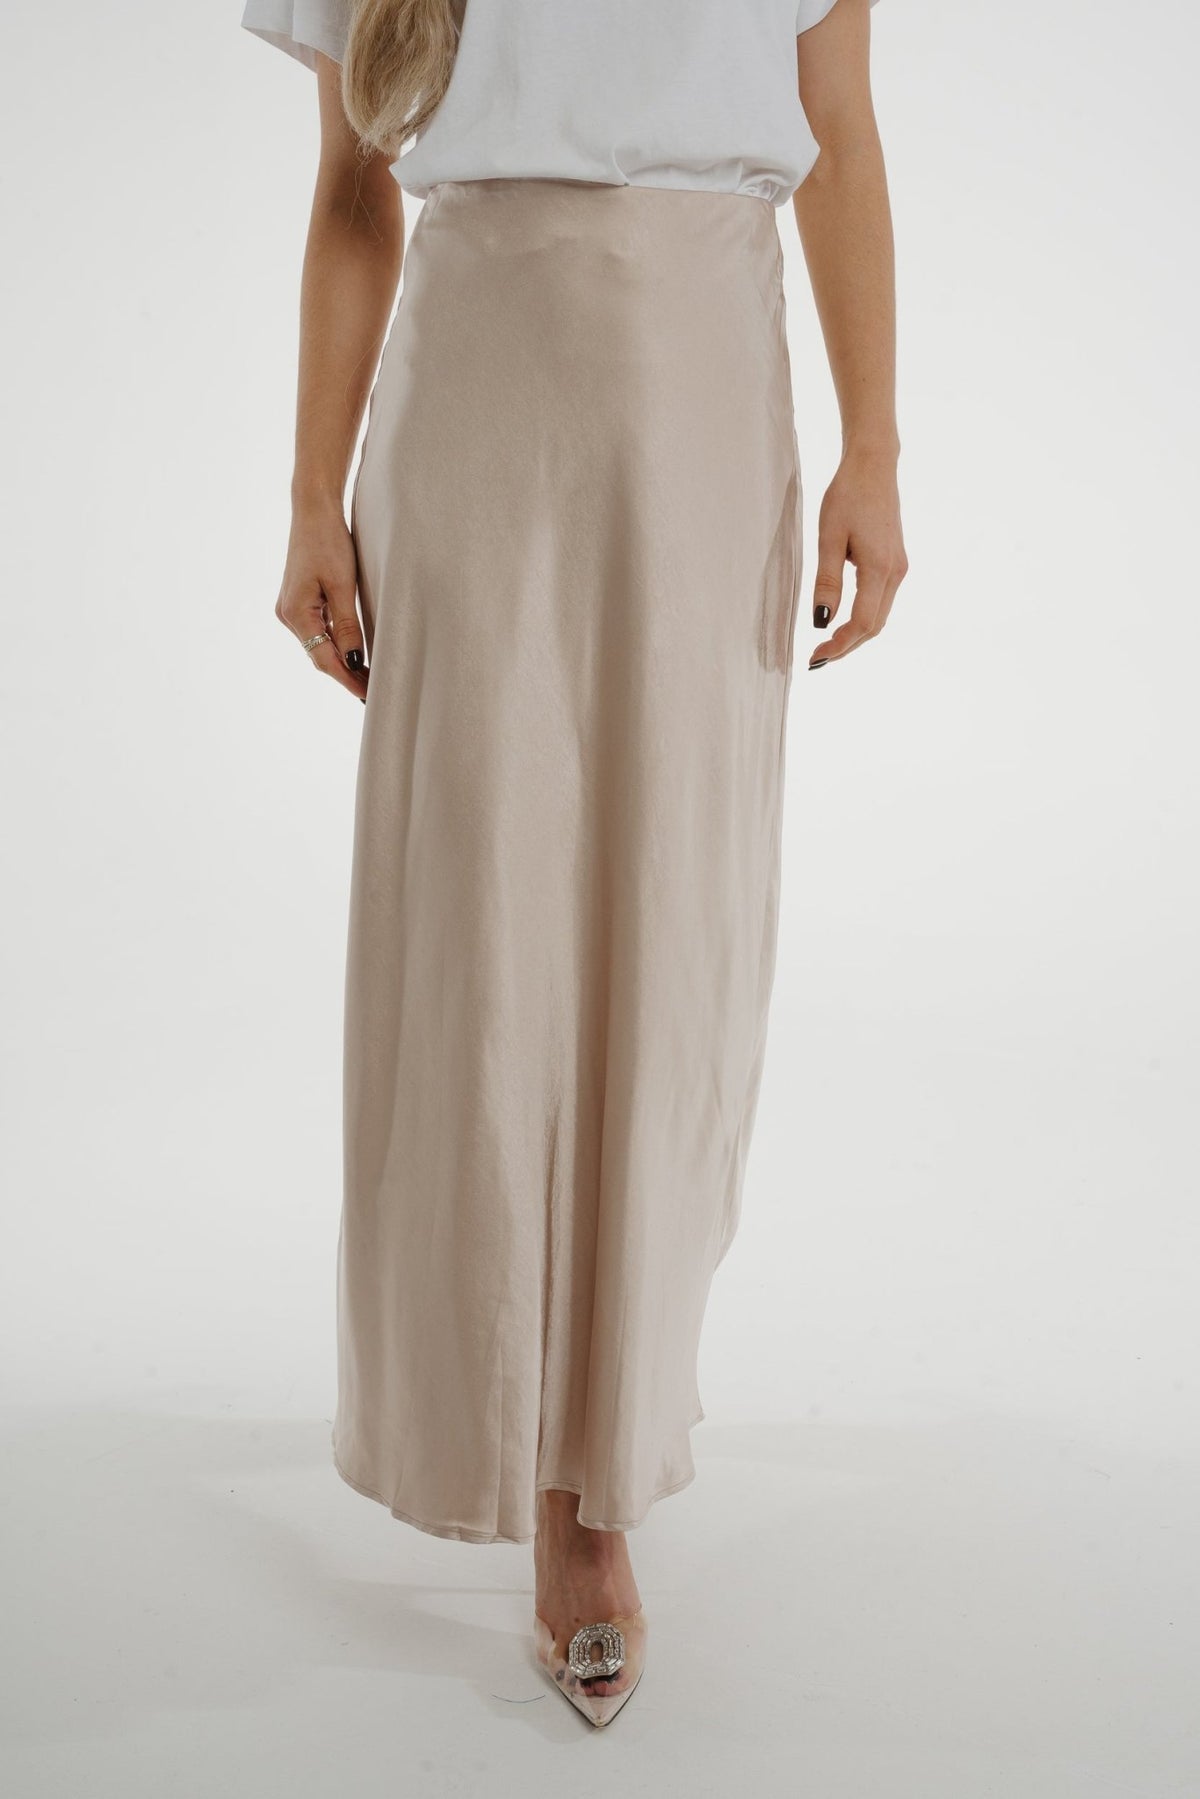 Jane Longline Satin Skirt In Neutral - The Walk in Wardrobe